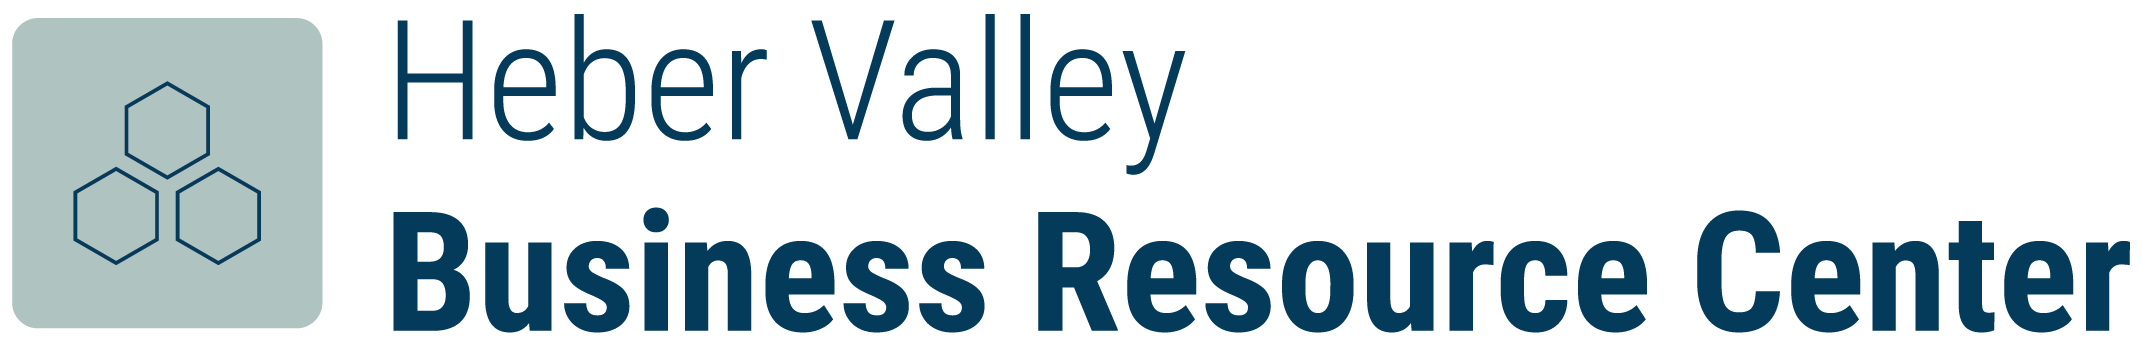 heber valley business resource center logo